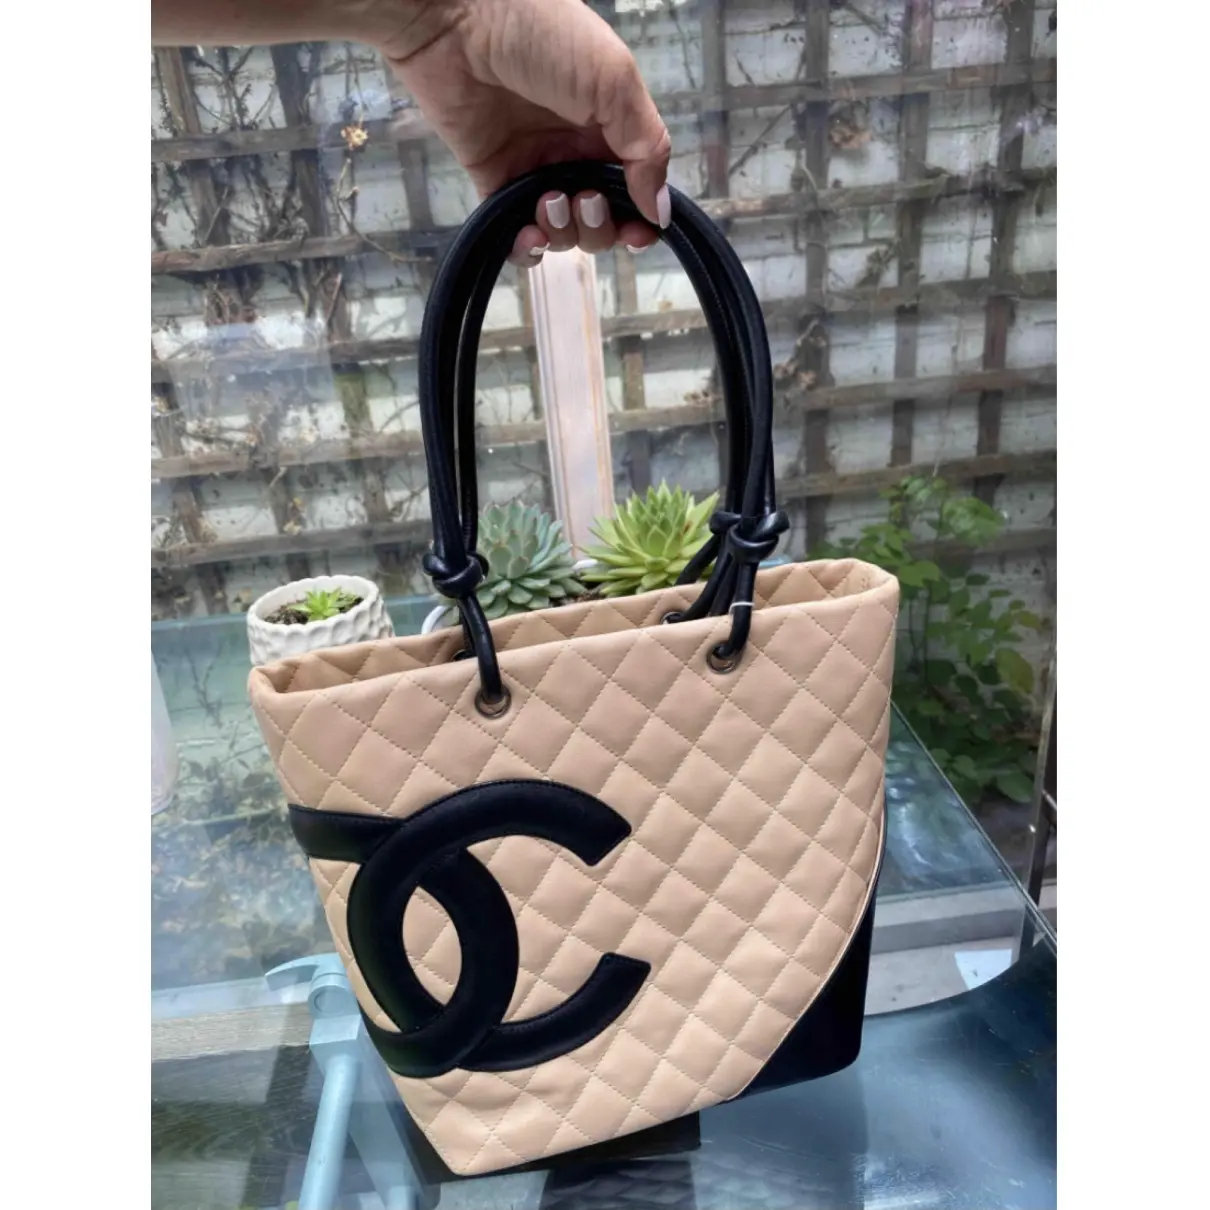 Buy Chanel Cambon leather handbag online